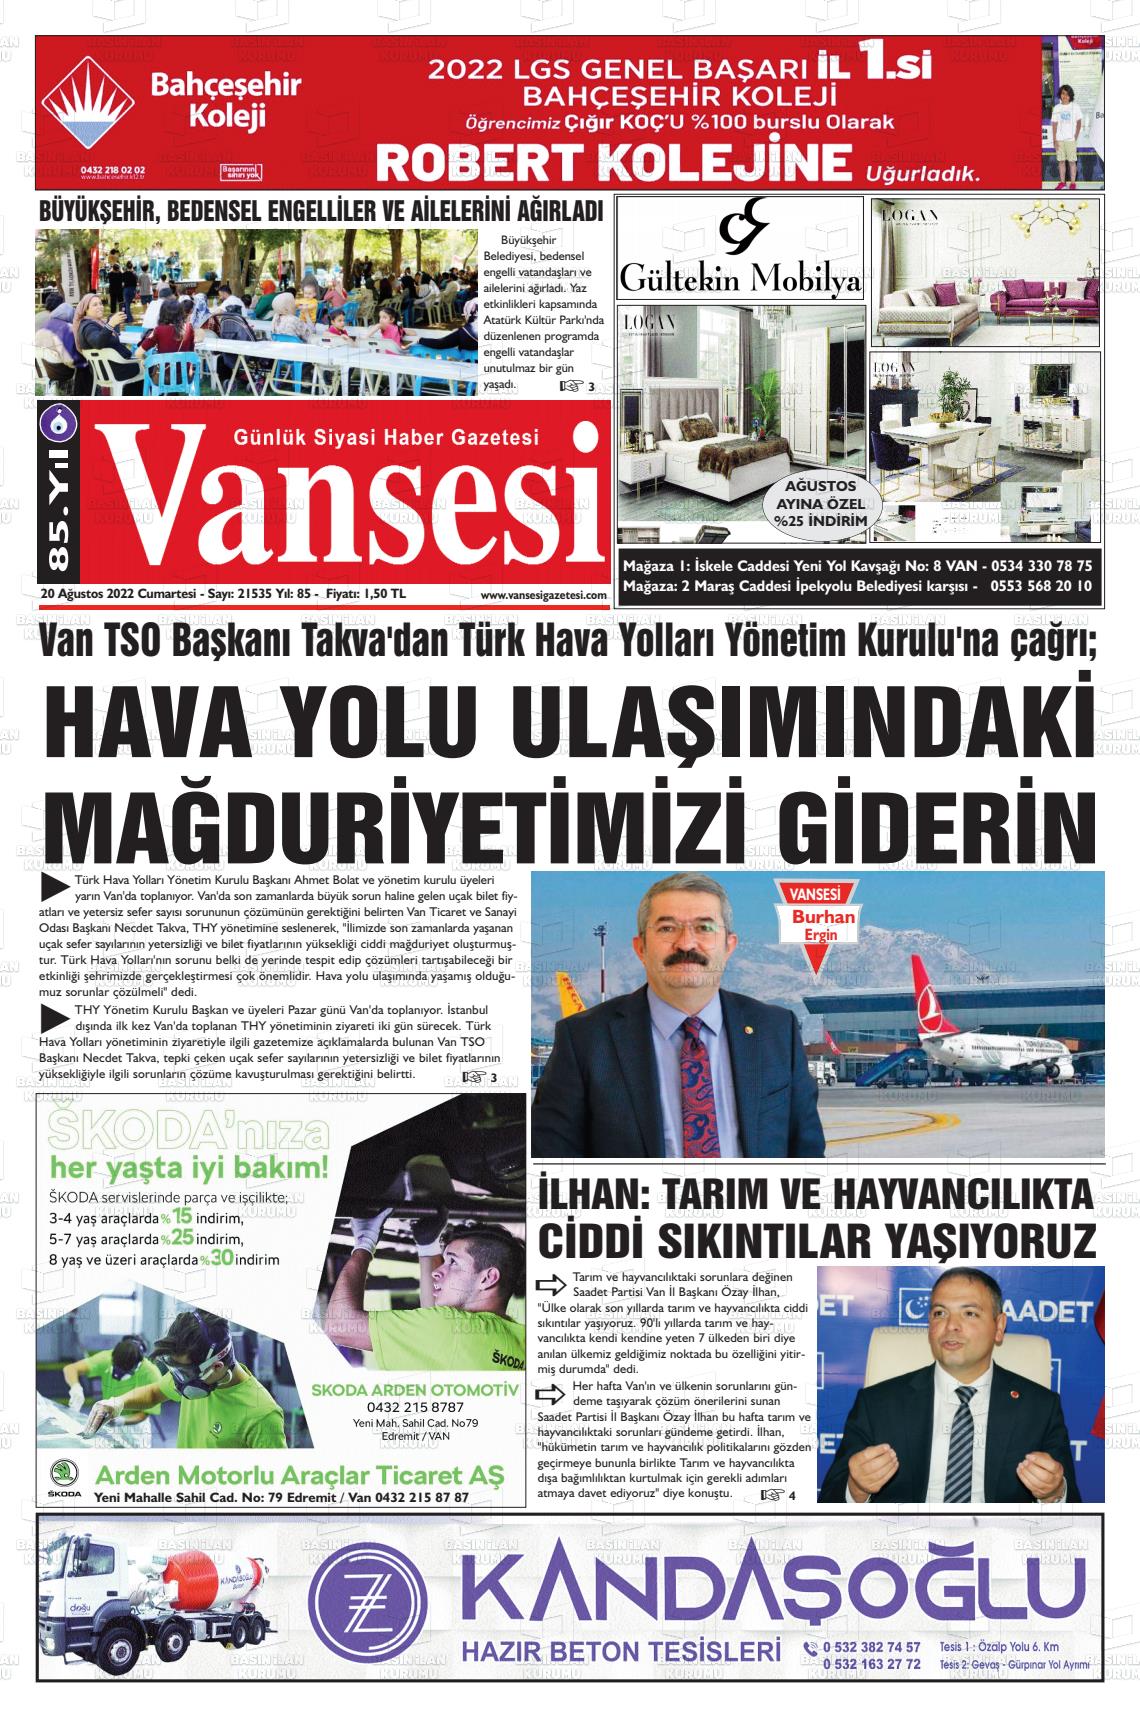 20 Ağustos 2022 Vansesi Gazete Manşeti